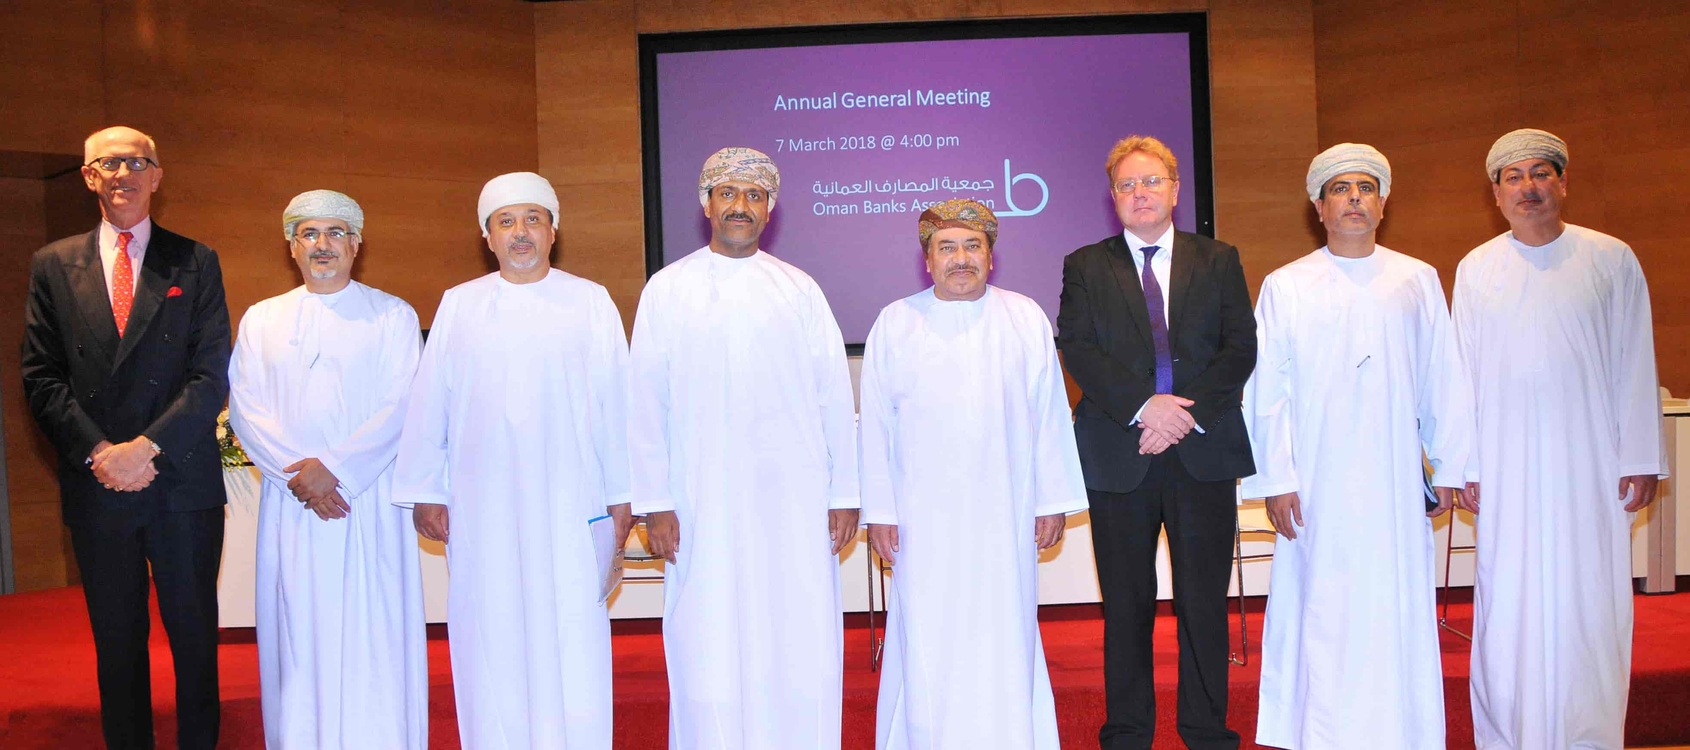 Oman Banks Association held its Annual General Meeting